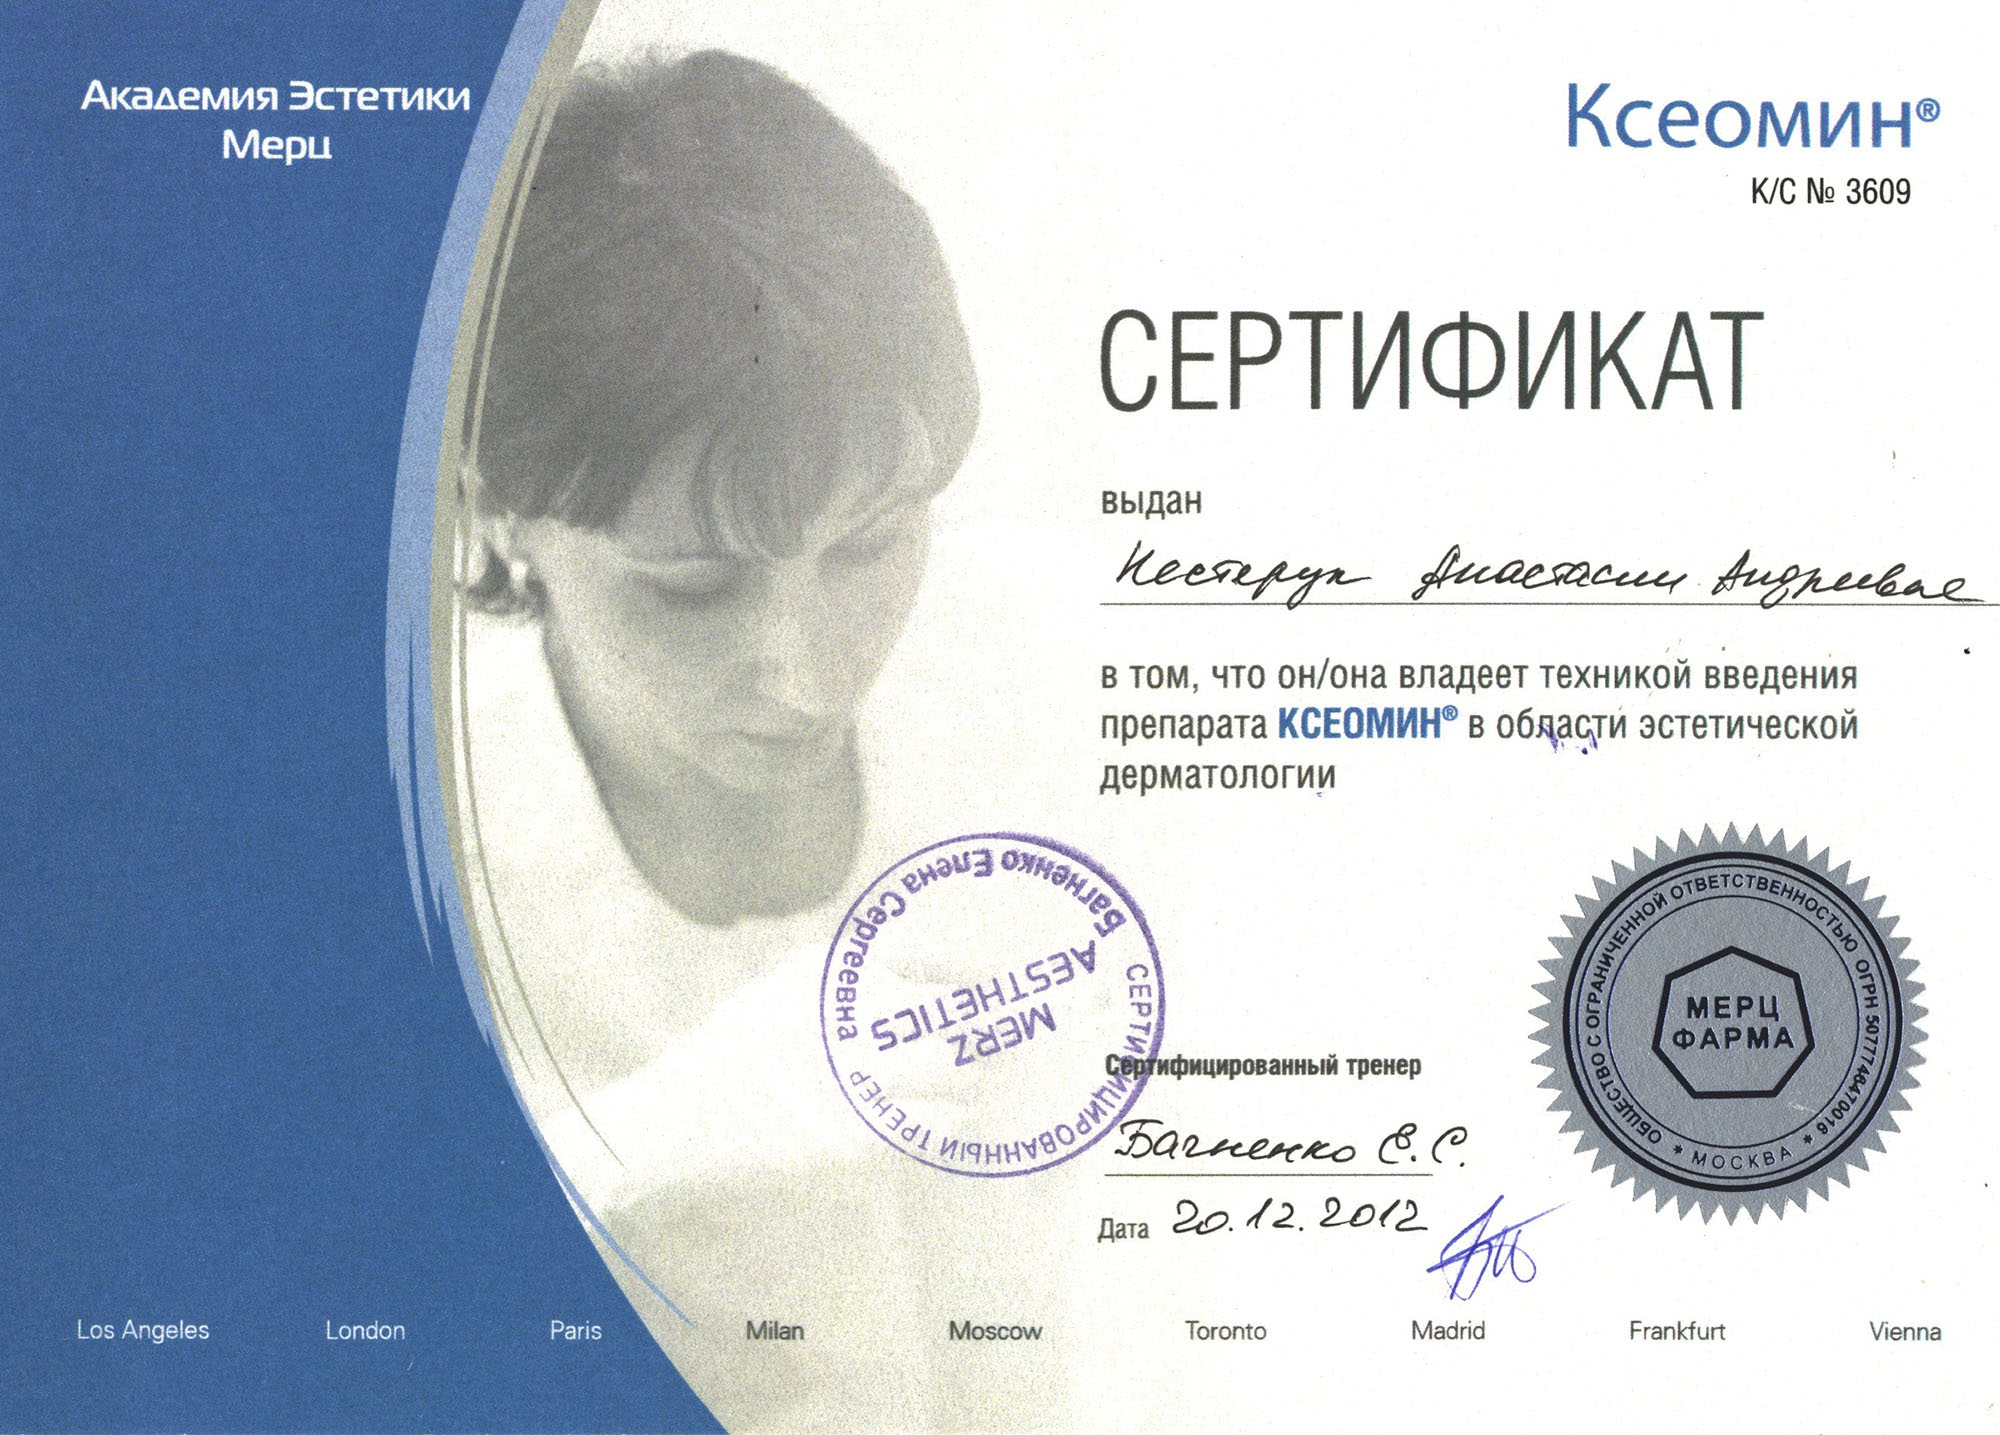 Сертификат — Курс «Применение препарата «Ксеомин». Яблочко Анастасия Андреевна